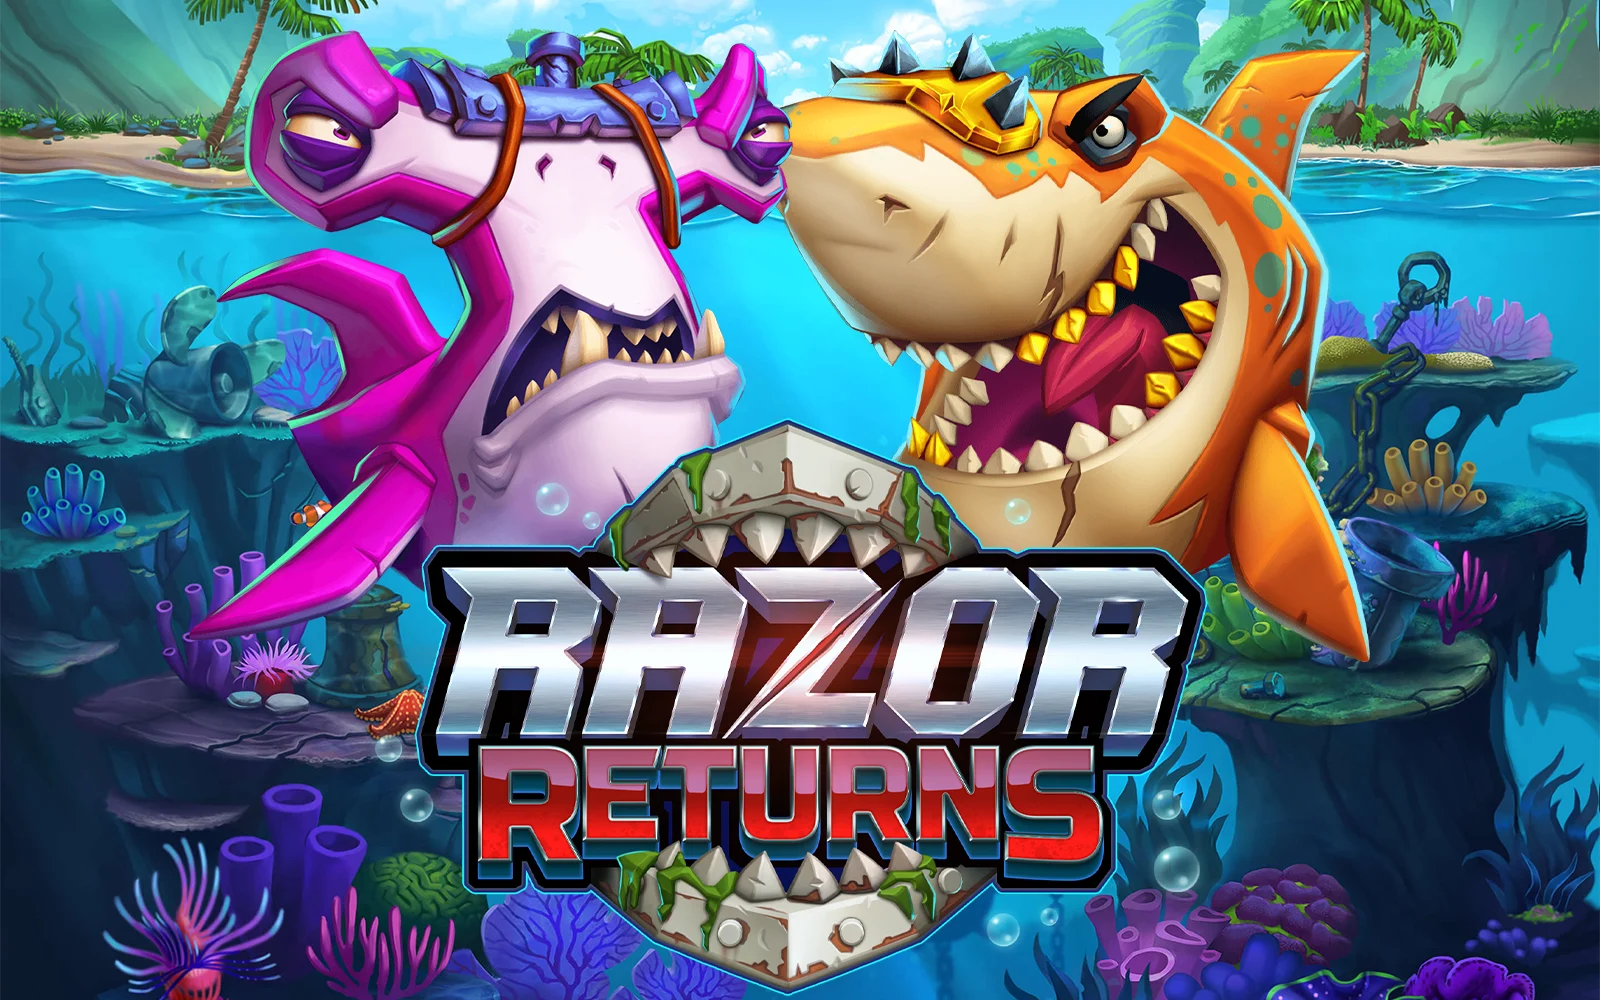 Juega a Razor Returns en el casino en línea de Starcasino.be